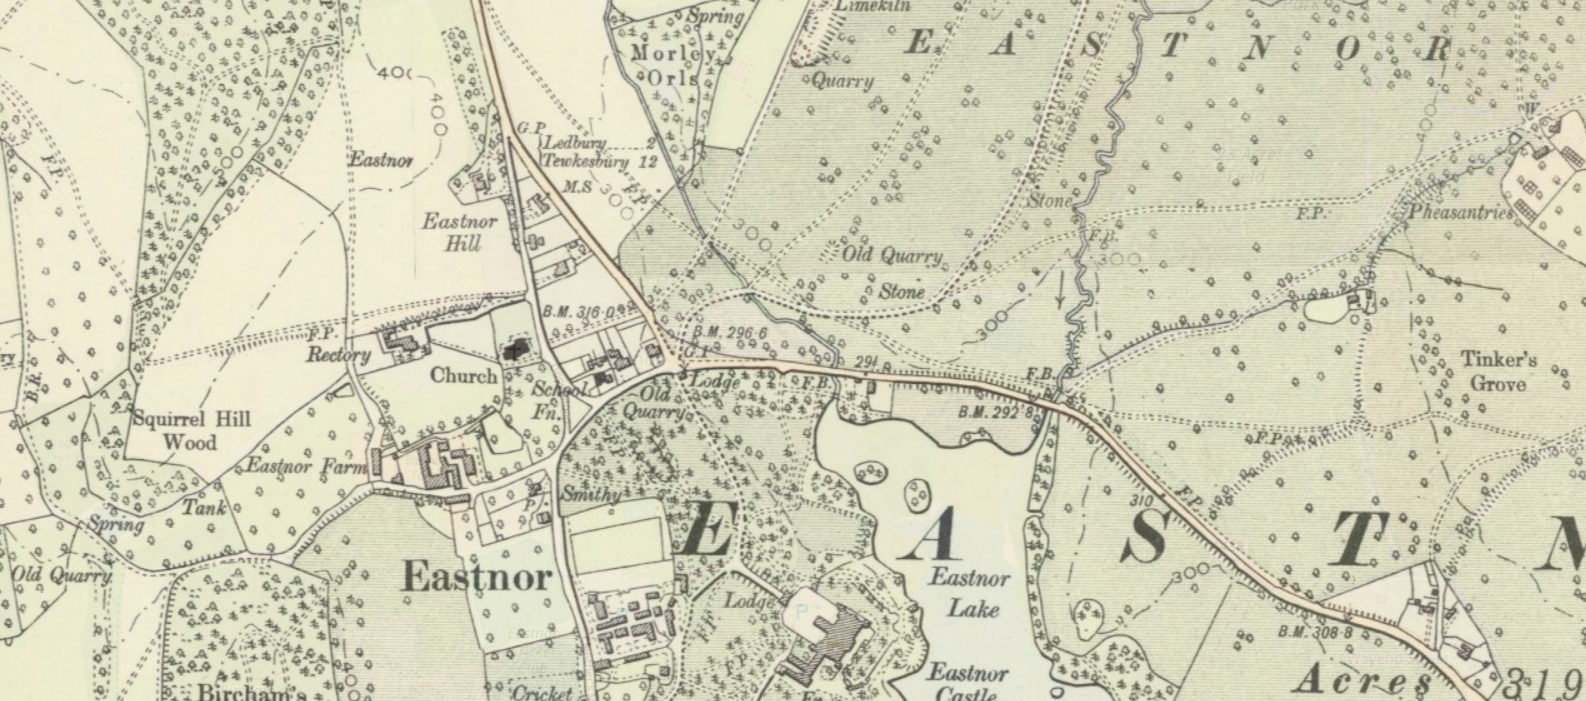 Eastnor map